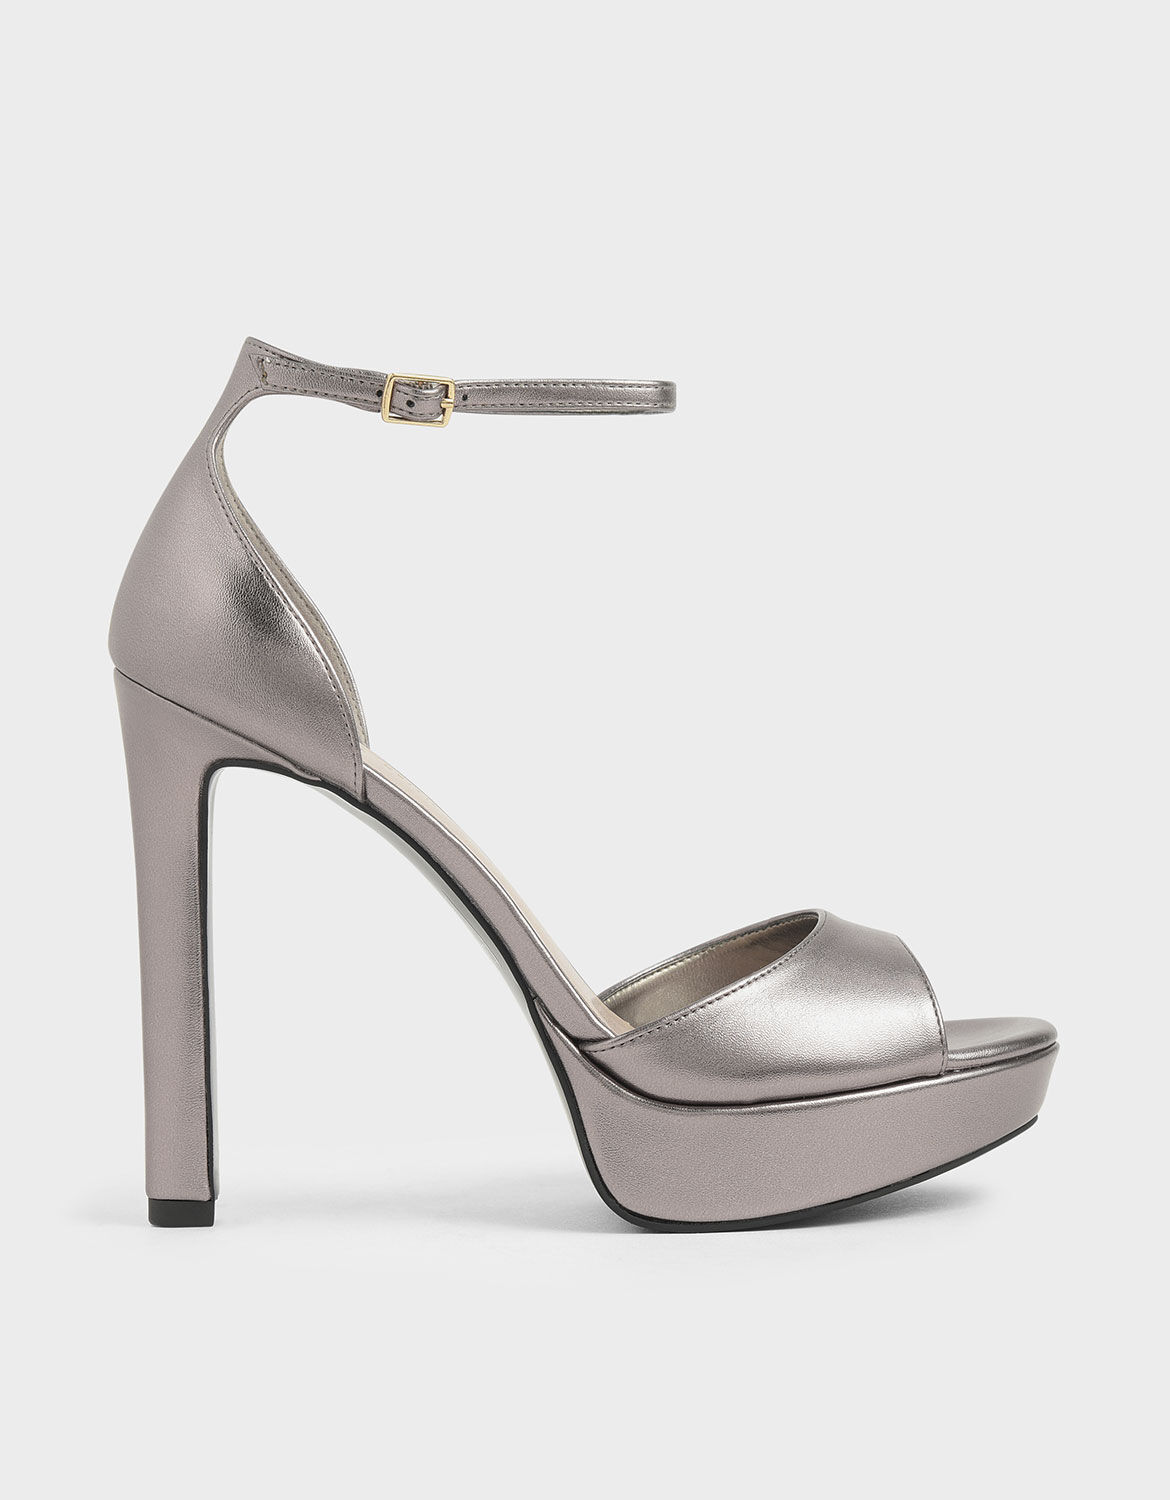 charles and keith platform heels